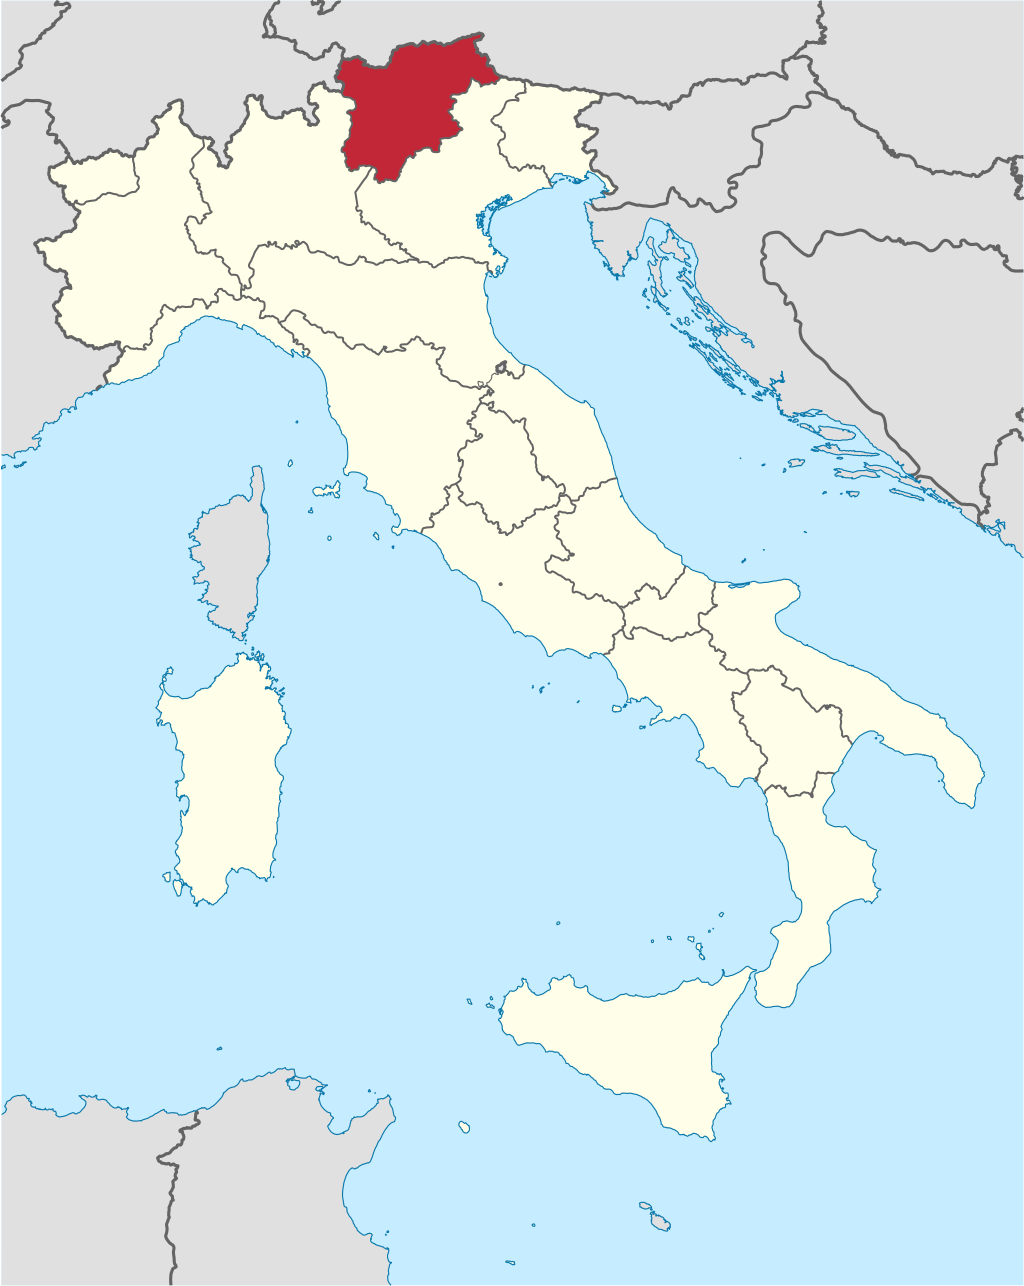 Hotel Vistalago Urbex location or around the region Trentino Alto Adige (Autonomous Province of Trento), Italy